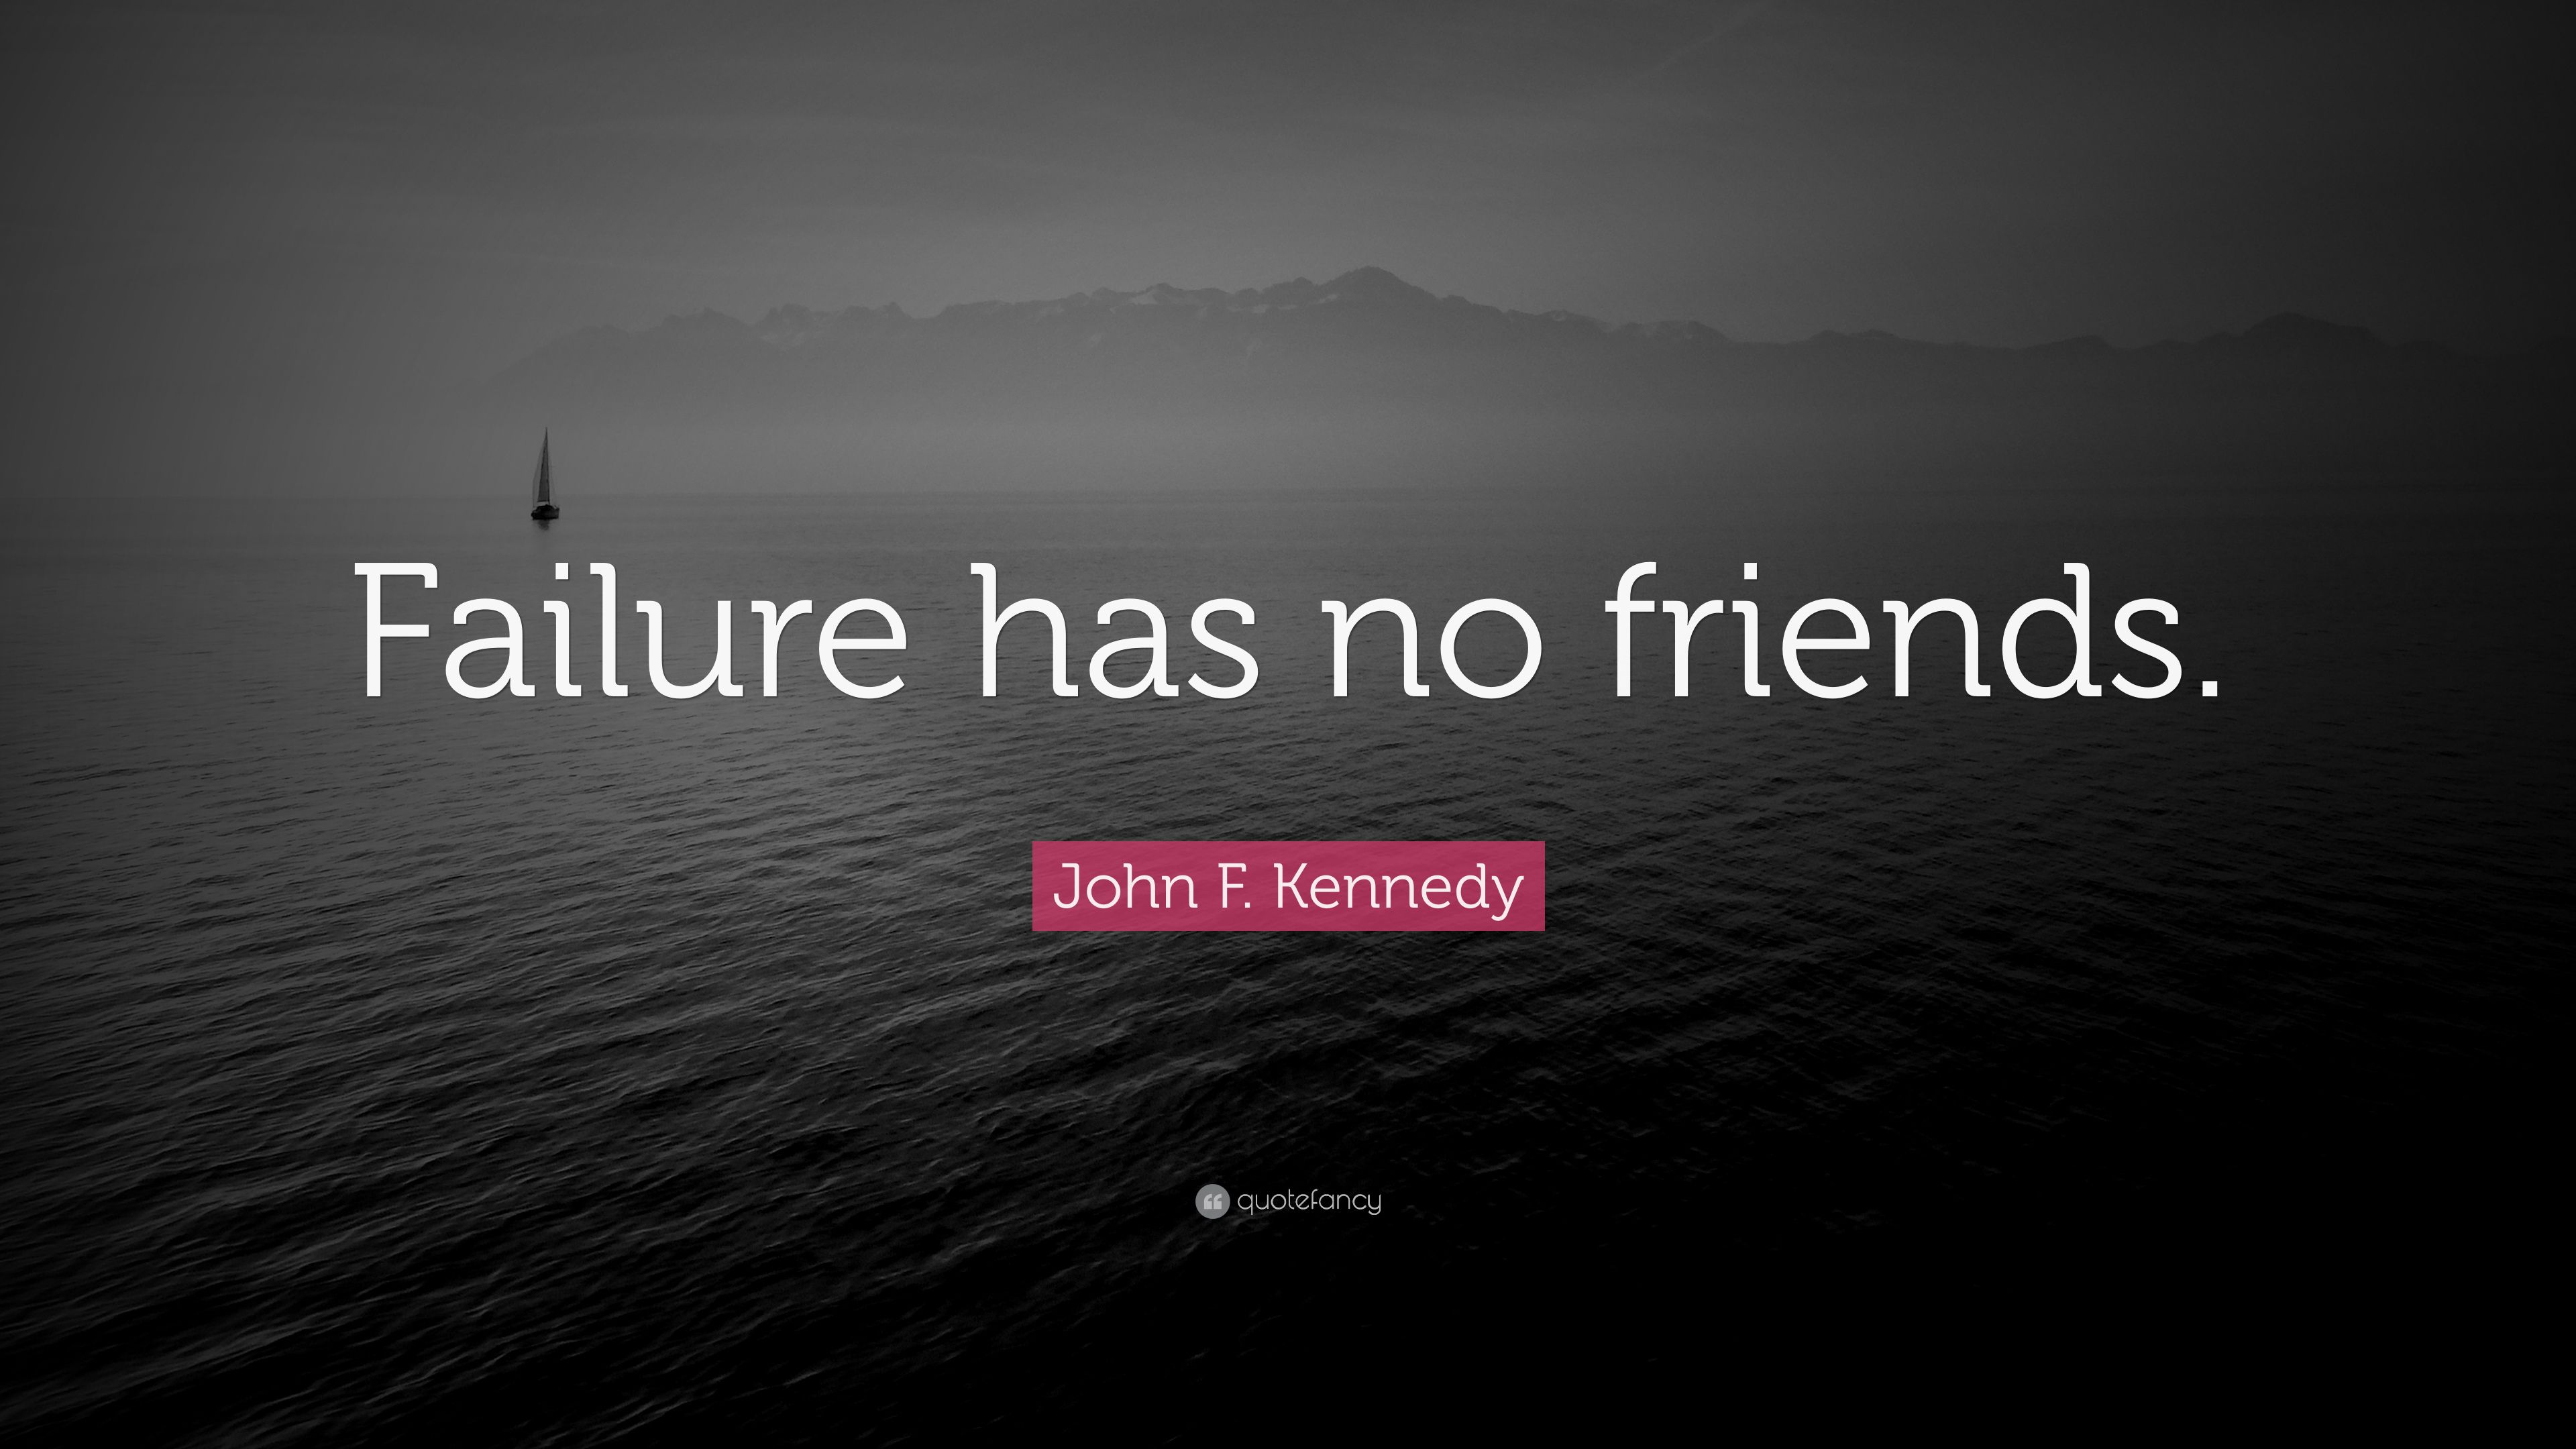 John F. Kennedy Quote: “Failure has no friends.” (12 wallpaper)